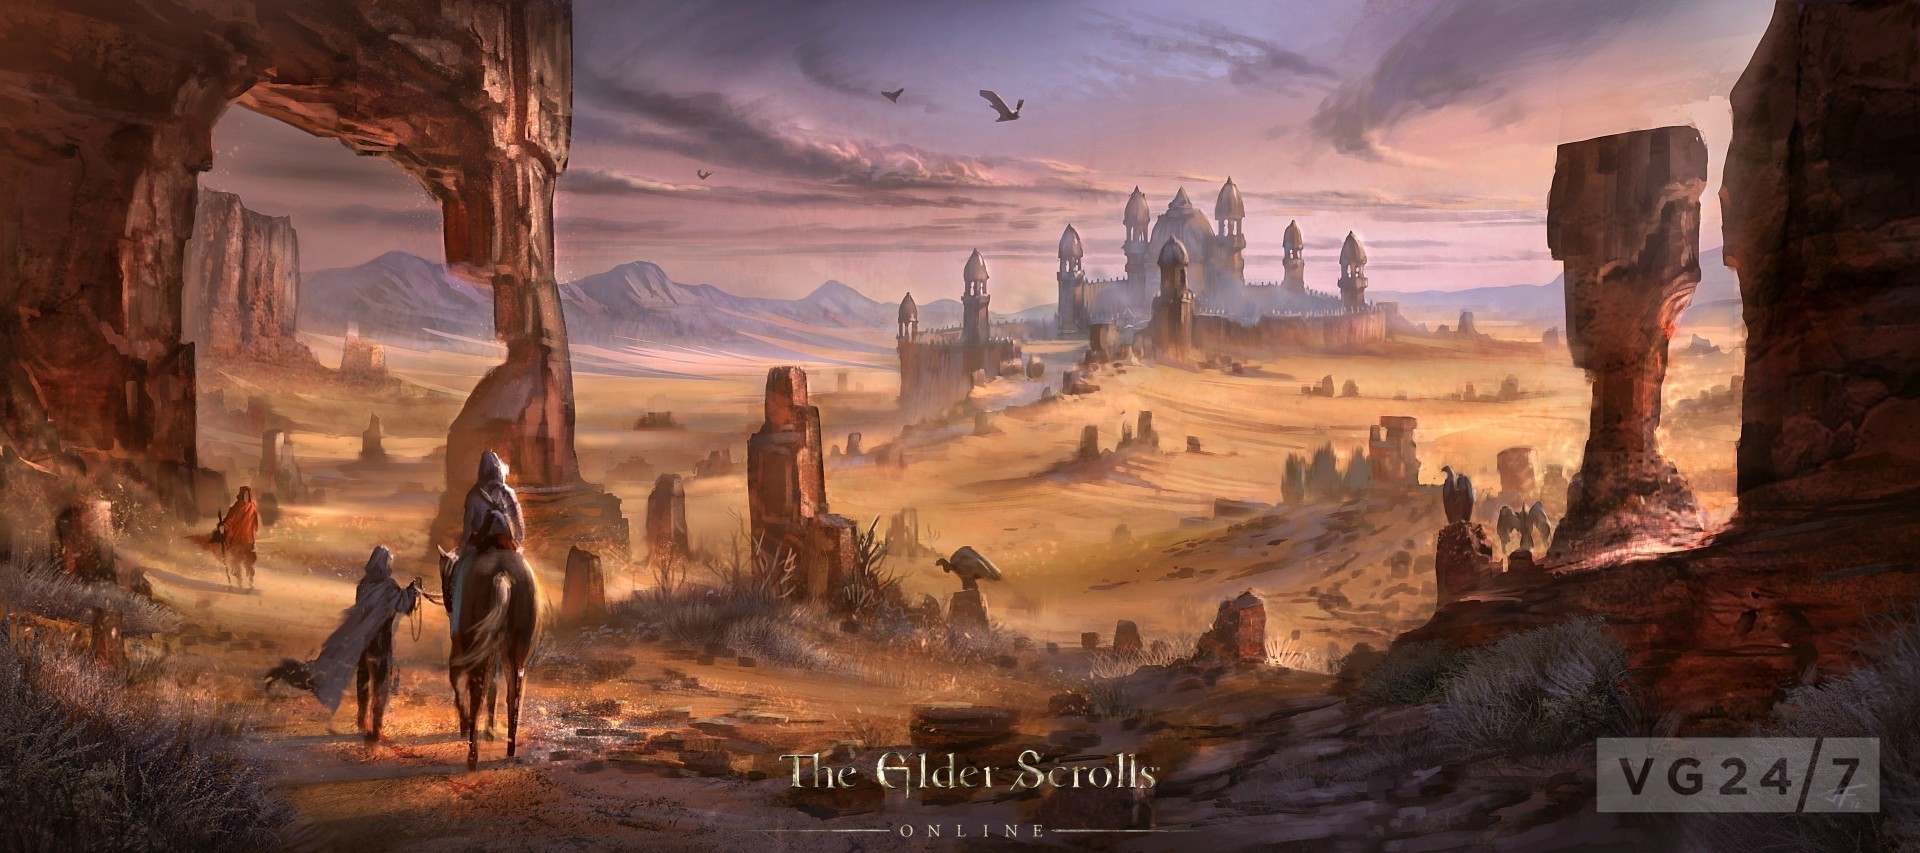 Elder Scrolls Online Concept Art Shows Skyrim Deserts And More